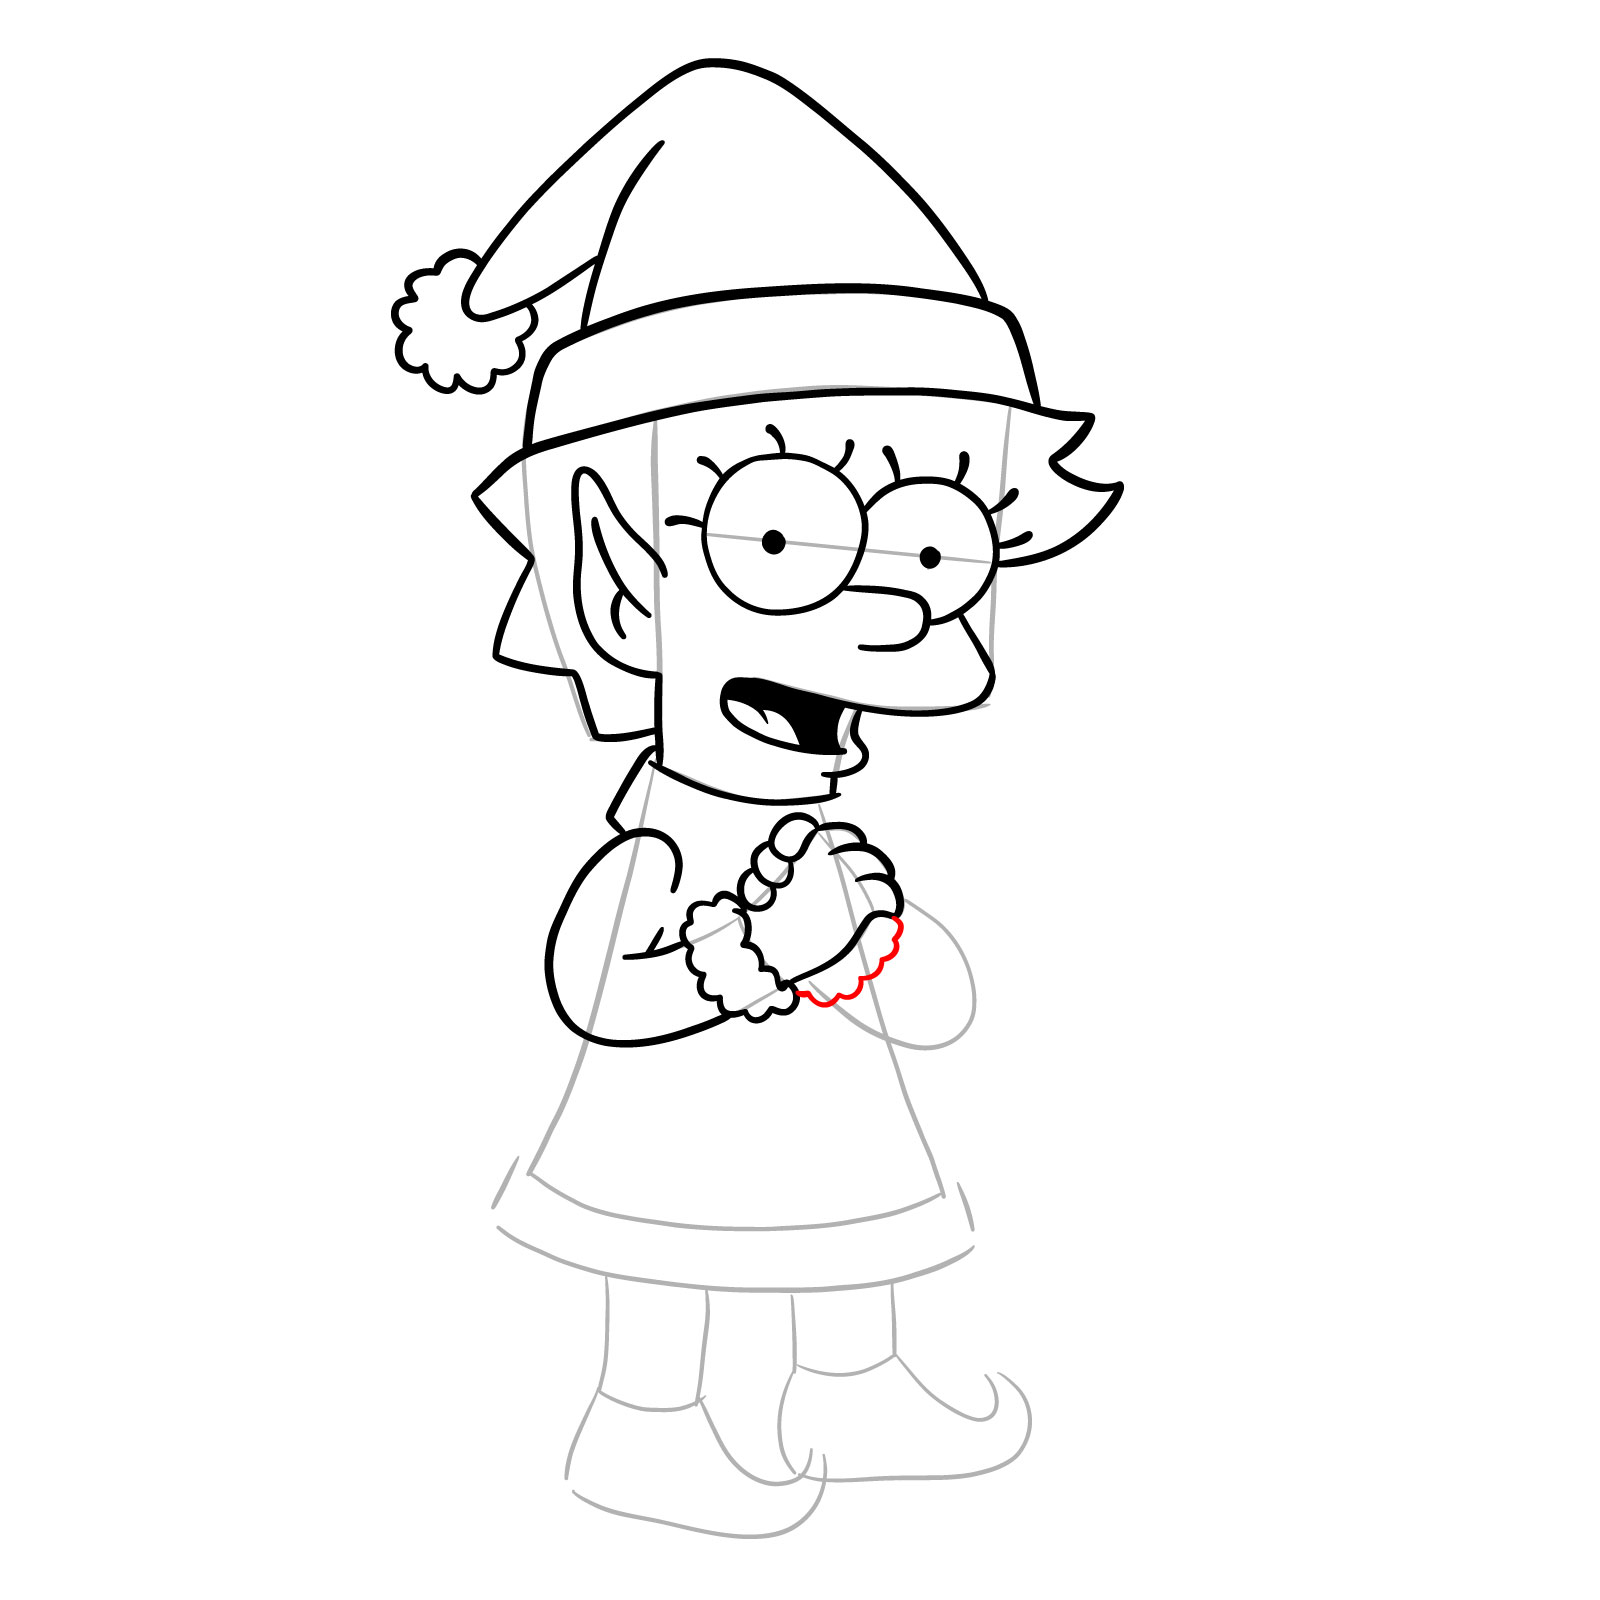 How to draw Christmas Elf Lisa Simpson - step 22